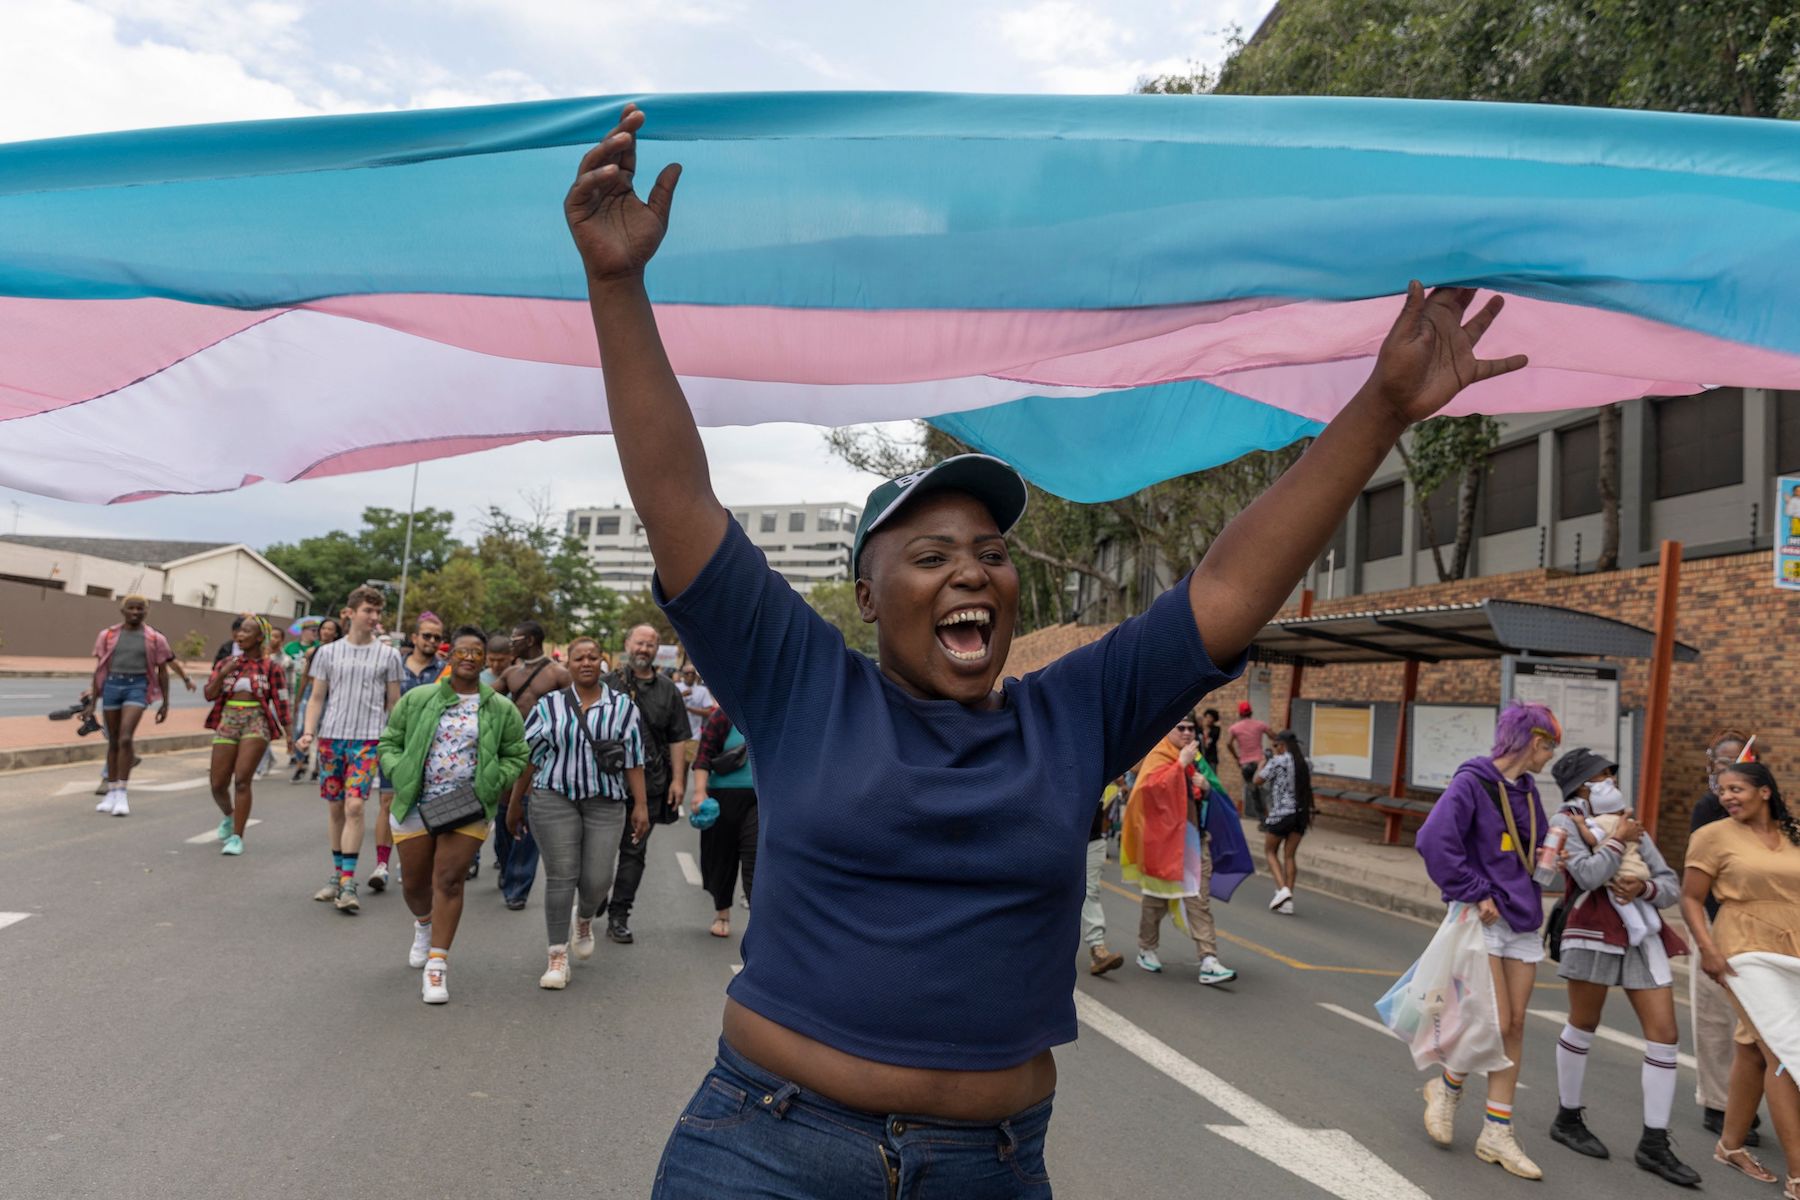 johannesburg pride 2022 south africa terror threat transexual